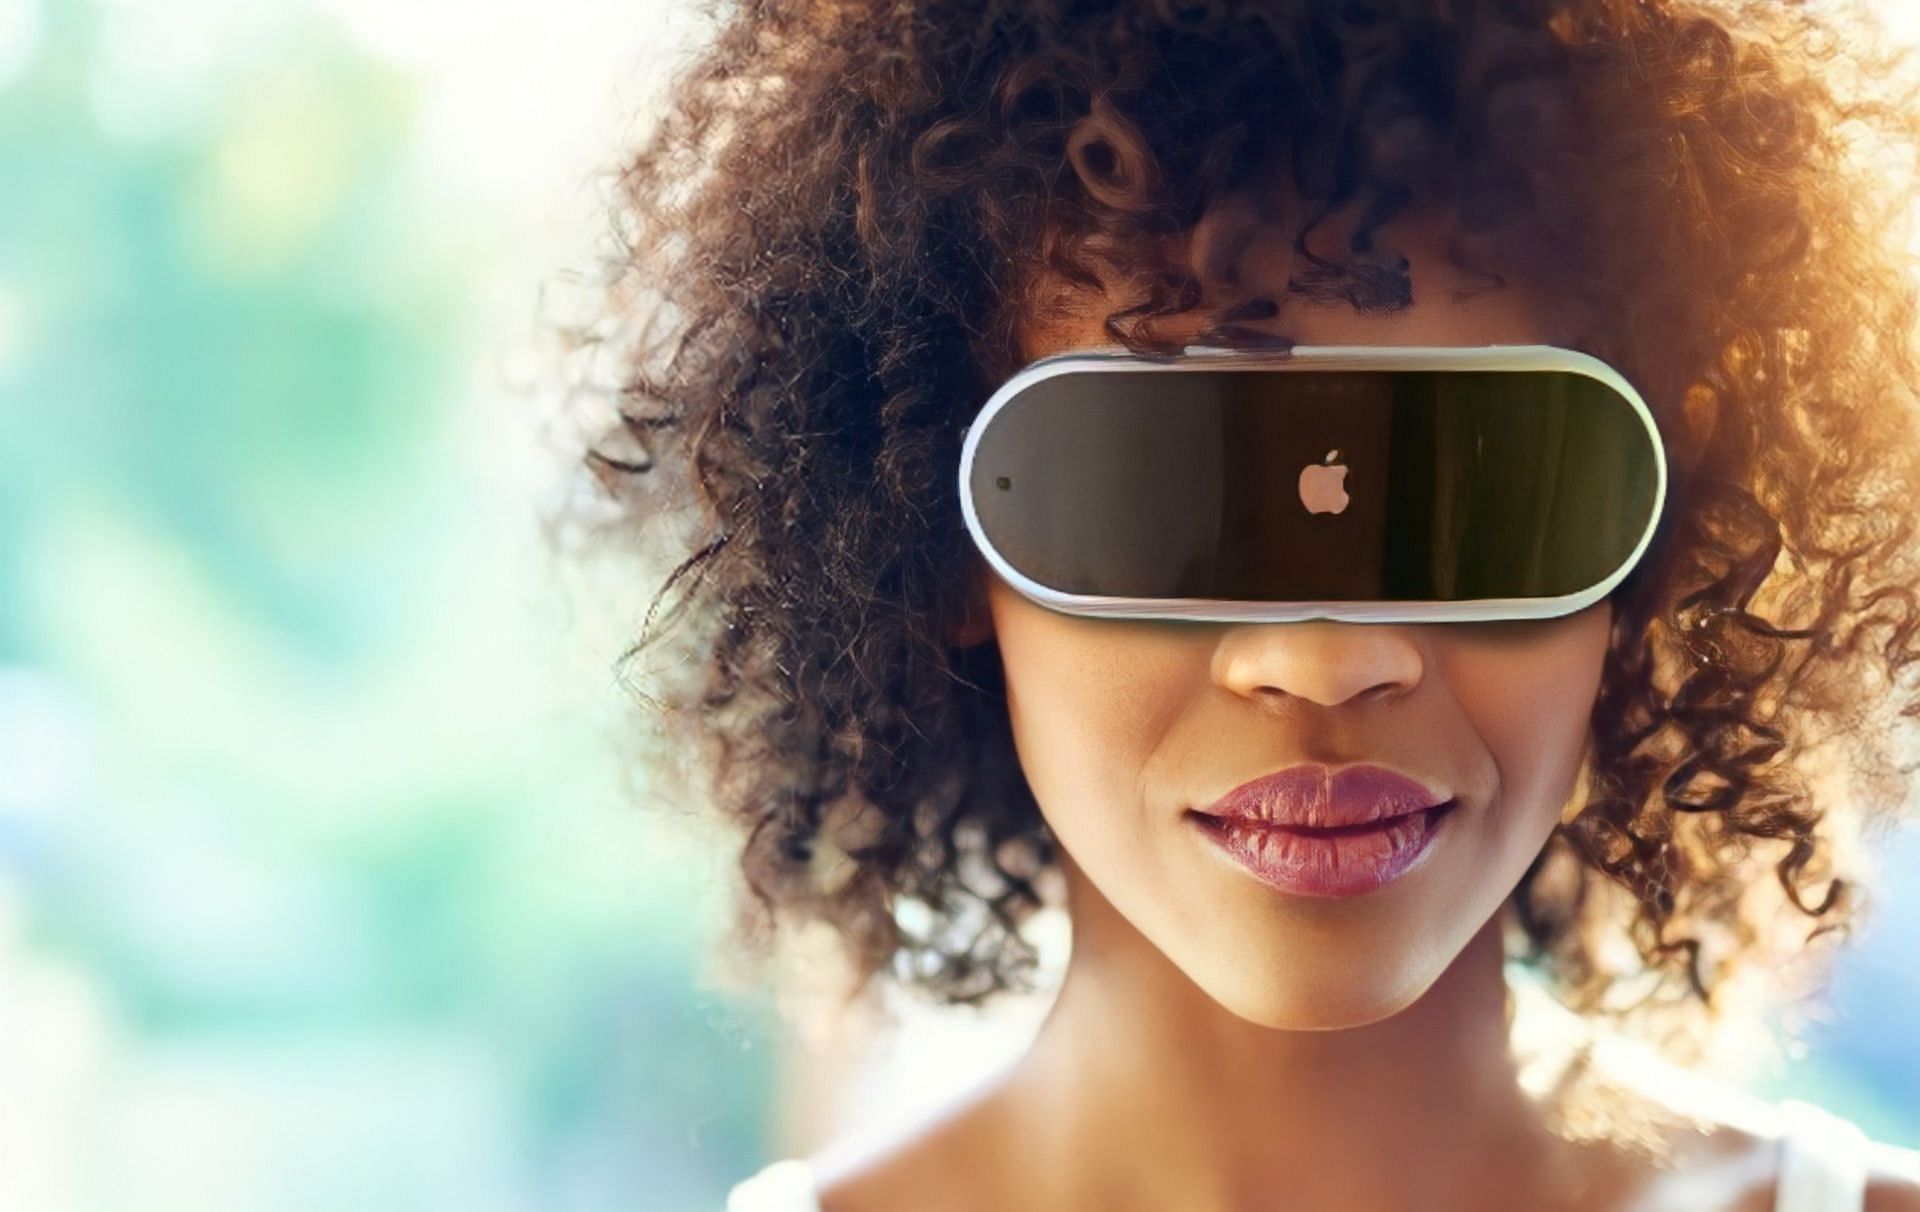 Apple AR/VR headset concept art (Image via Antonio De Rosa)